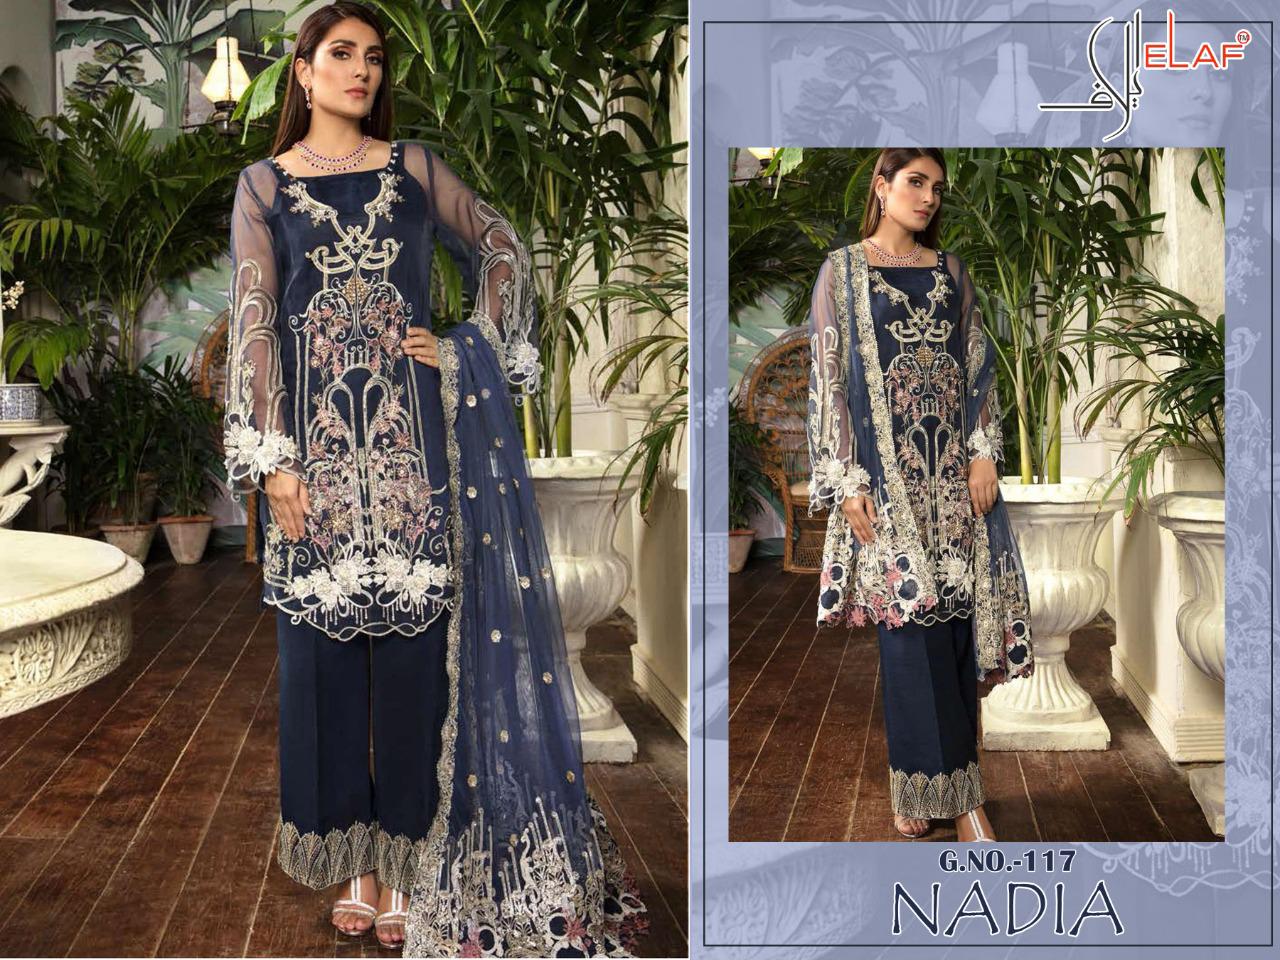 elaf nadia butterfly net attrective style salwar suit single